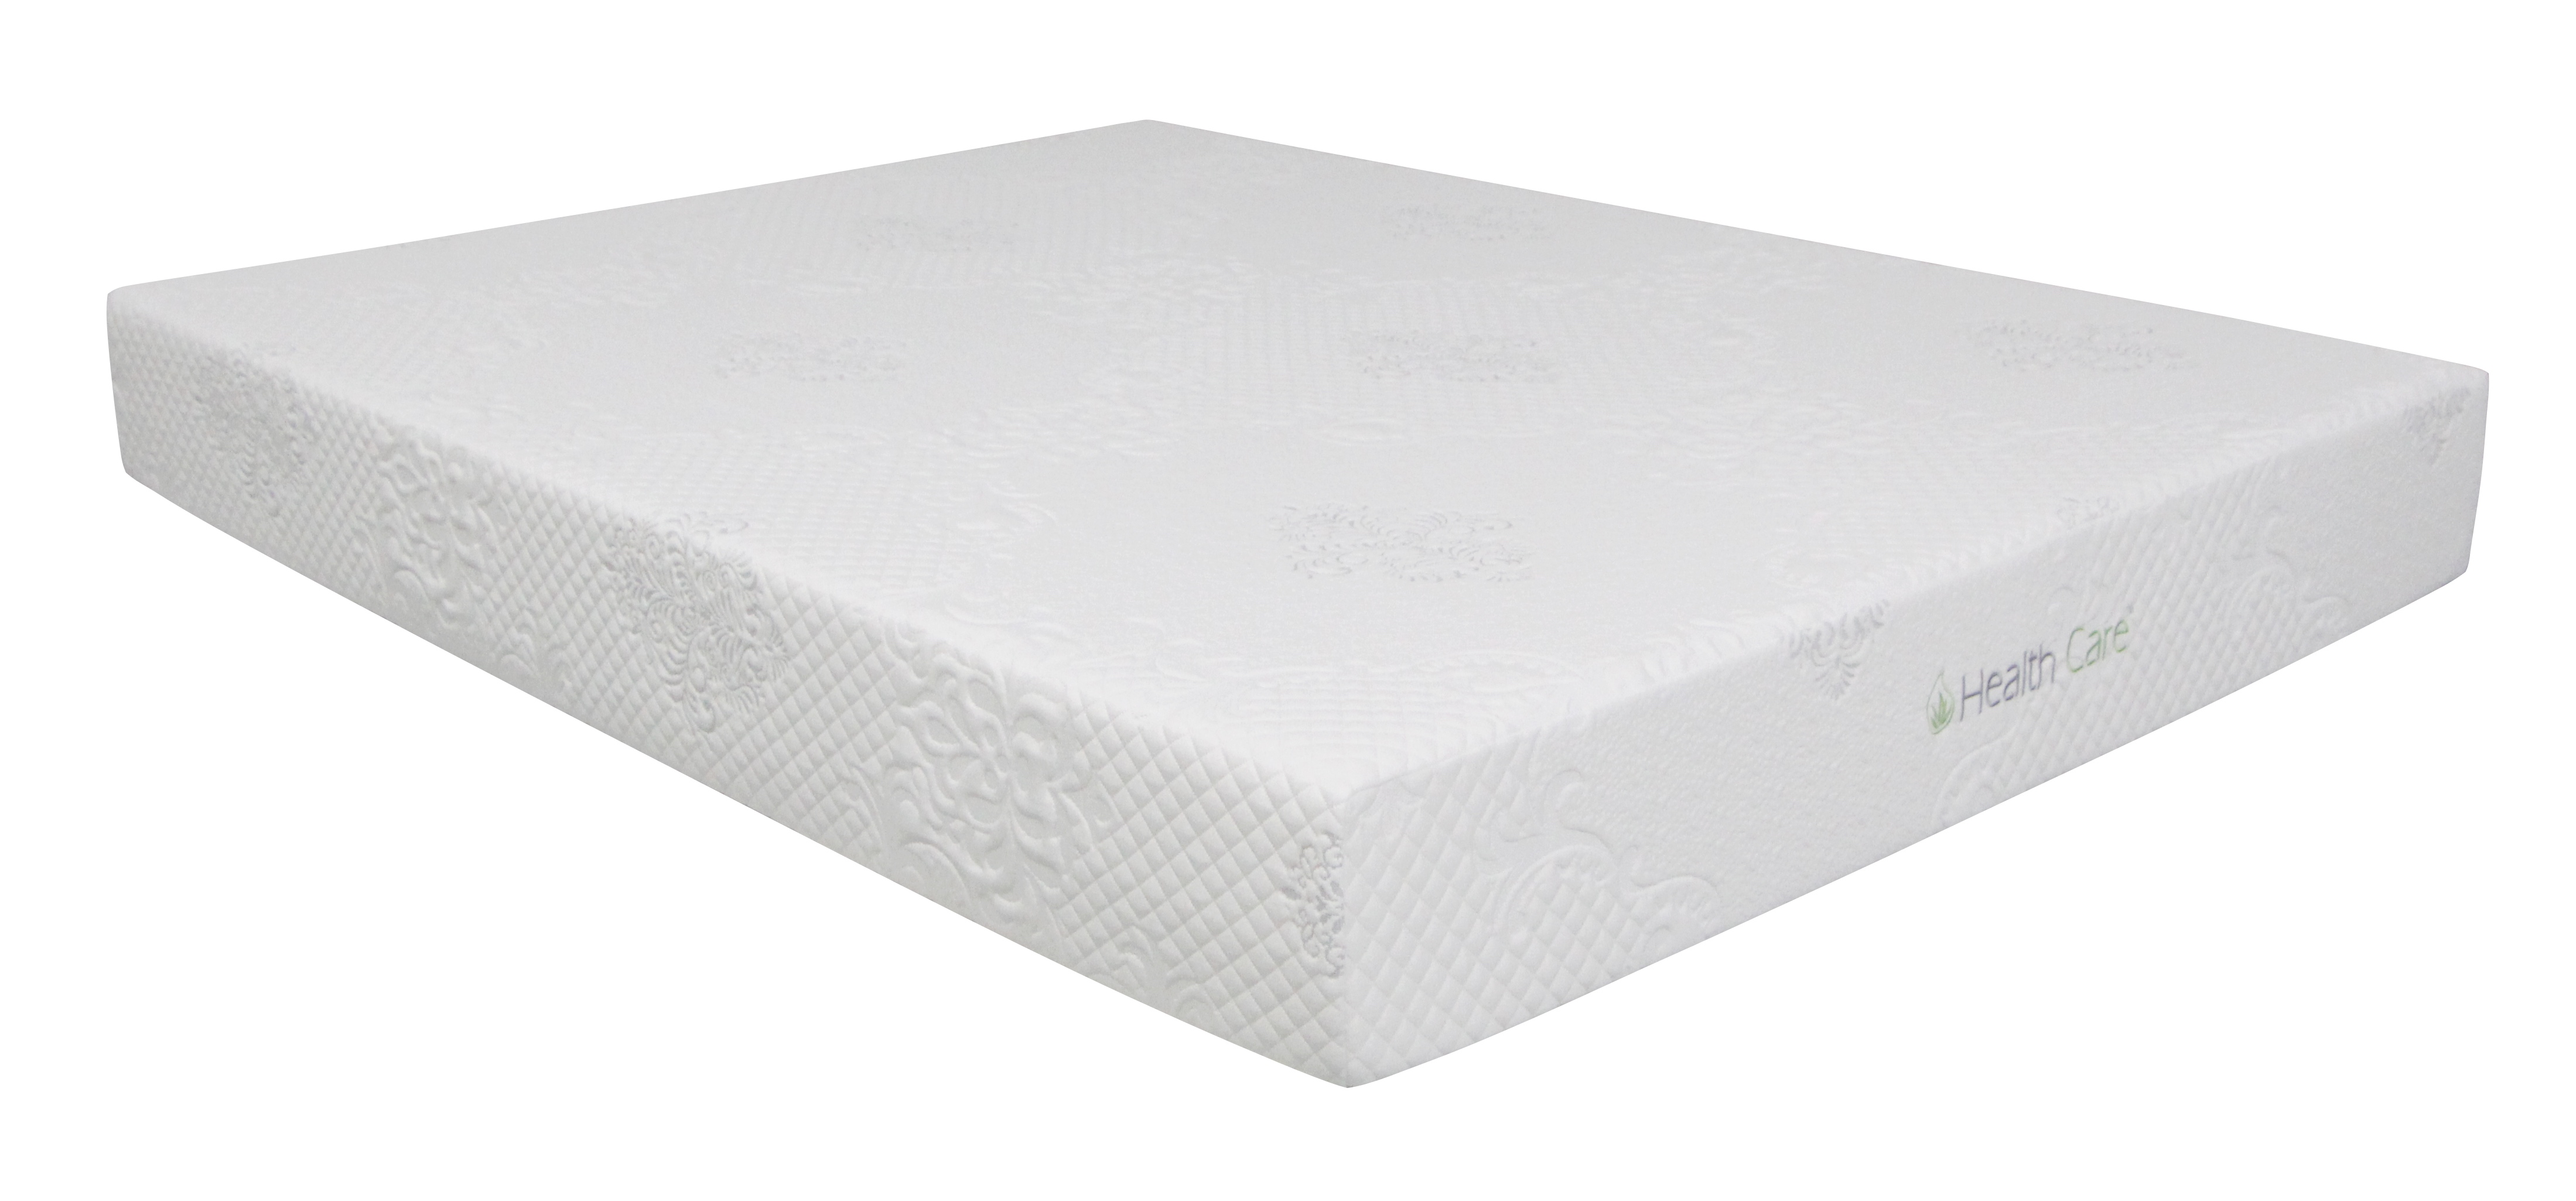 health care memory foam mattress review